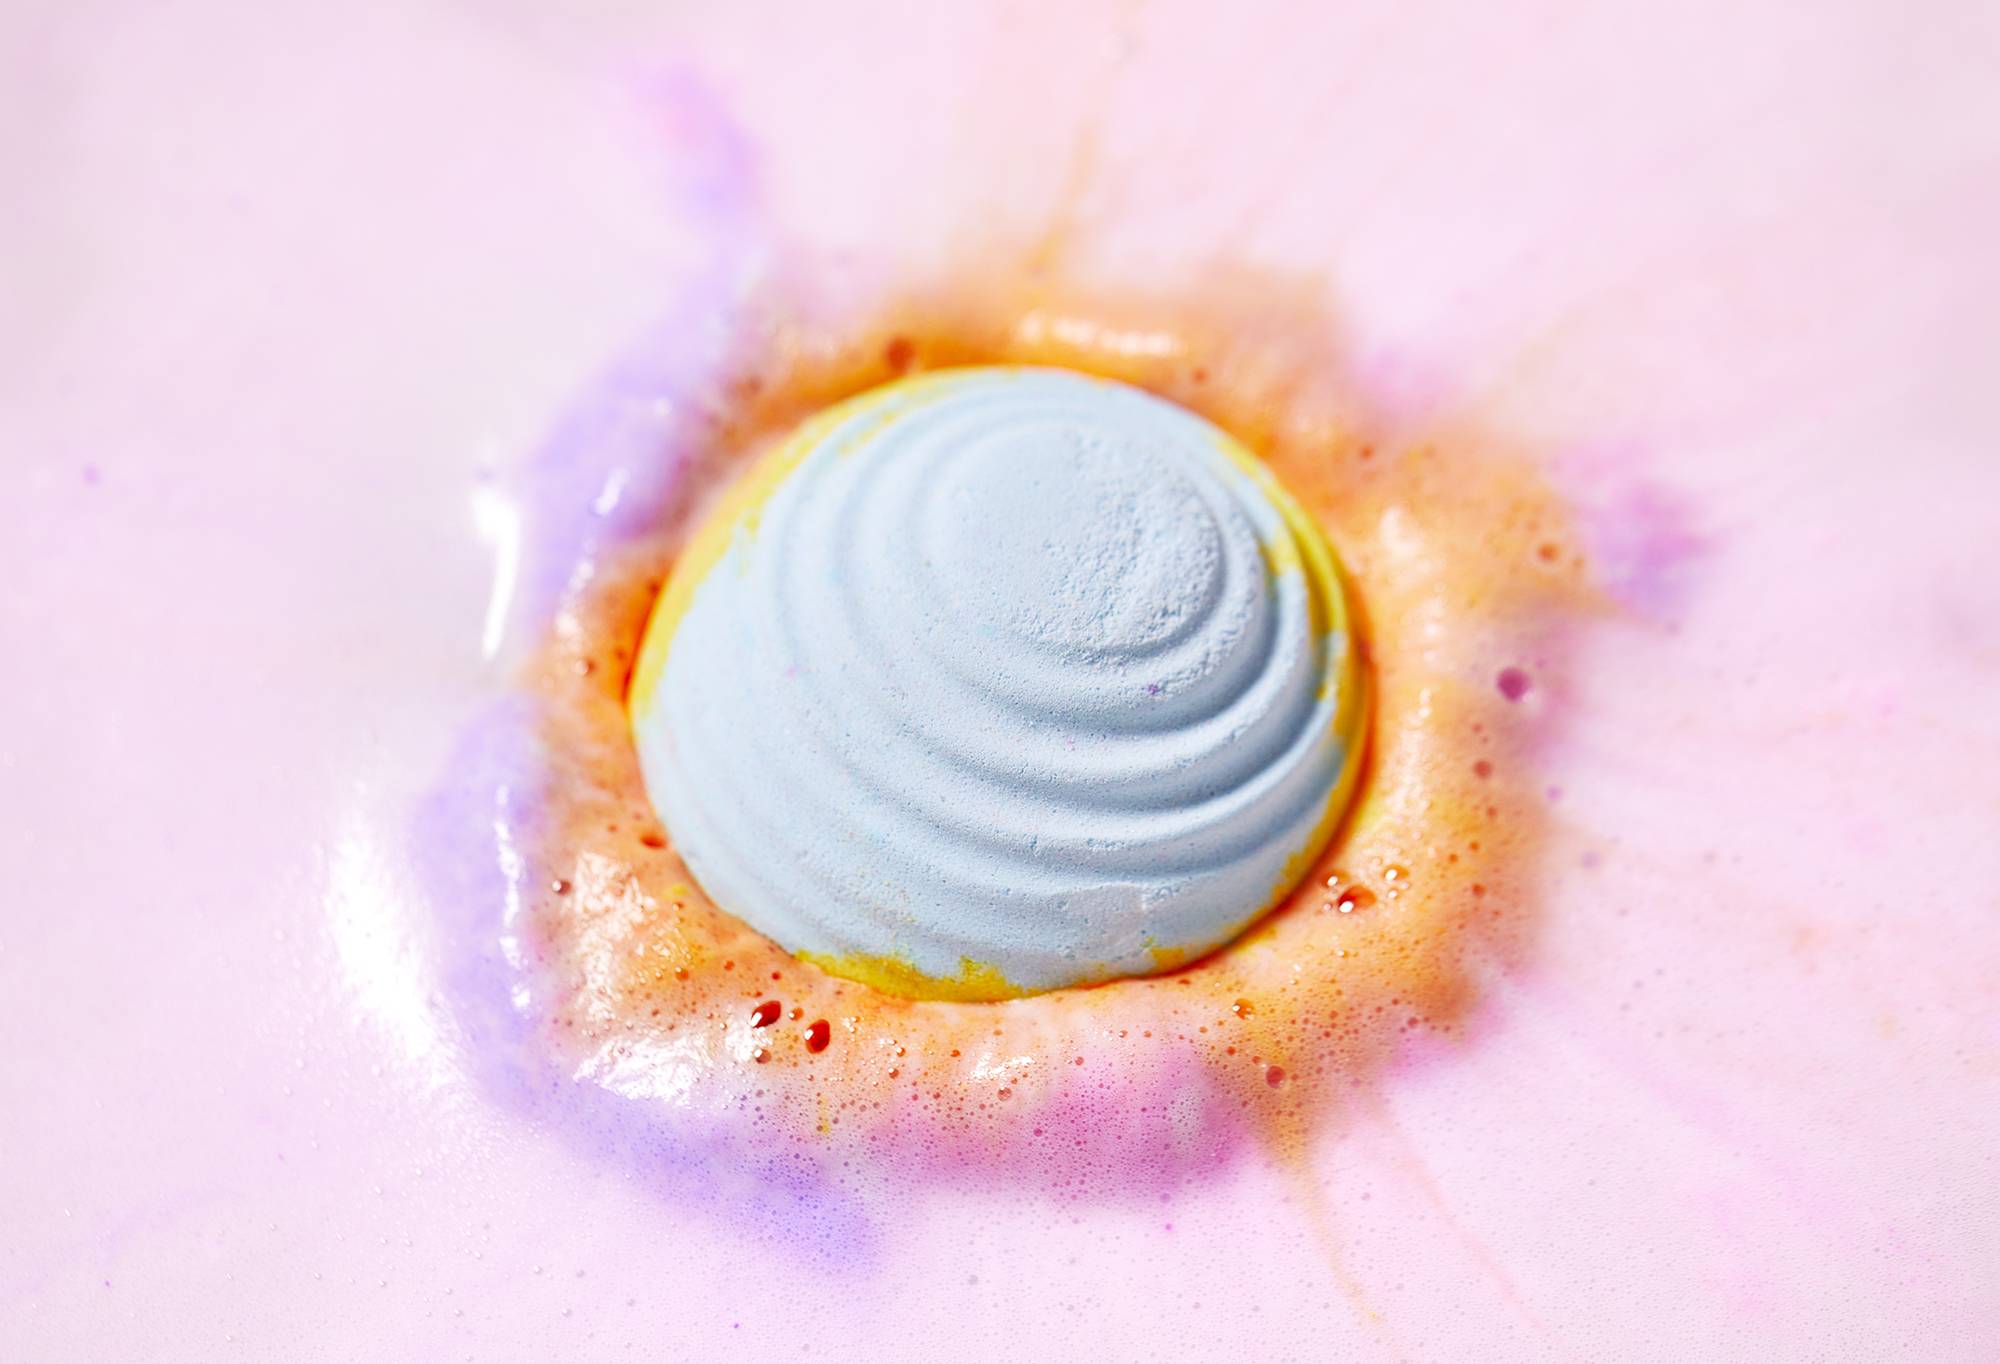 Unicorn Poop bath bomb floats among a velvety blanket of soft pink and orange foam bubbles.